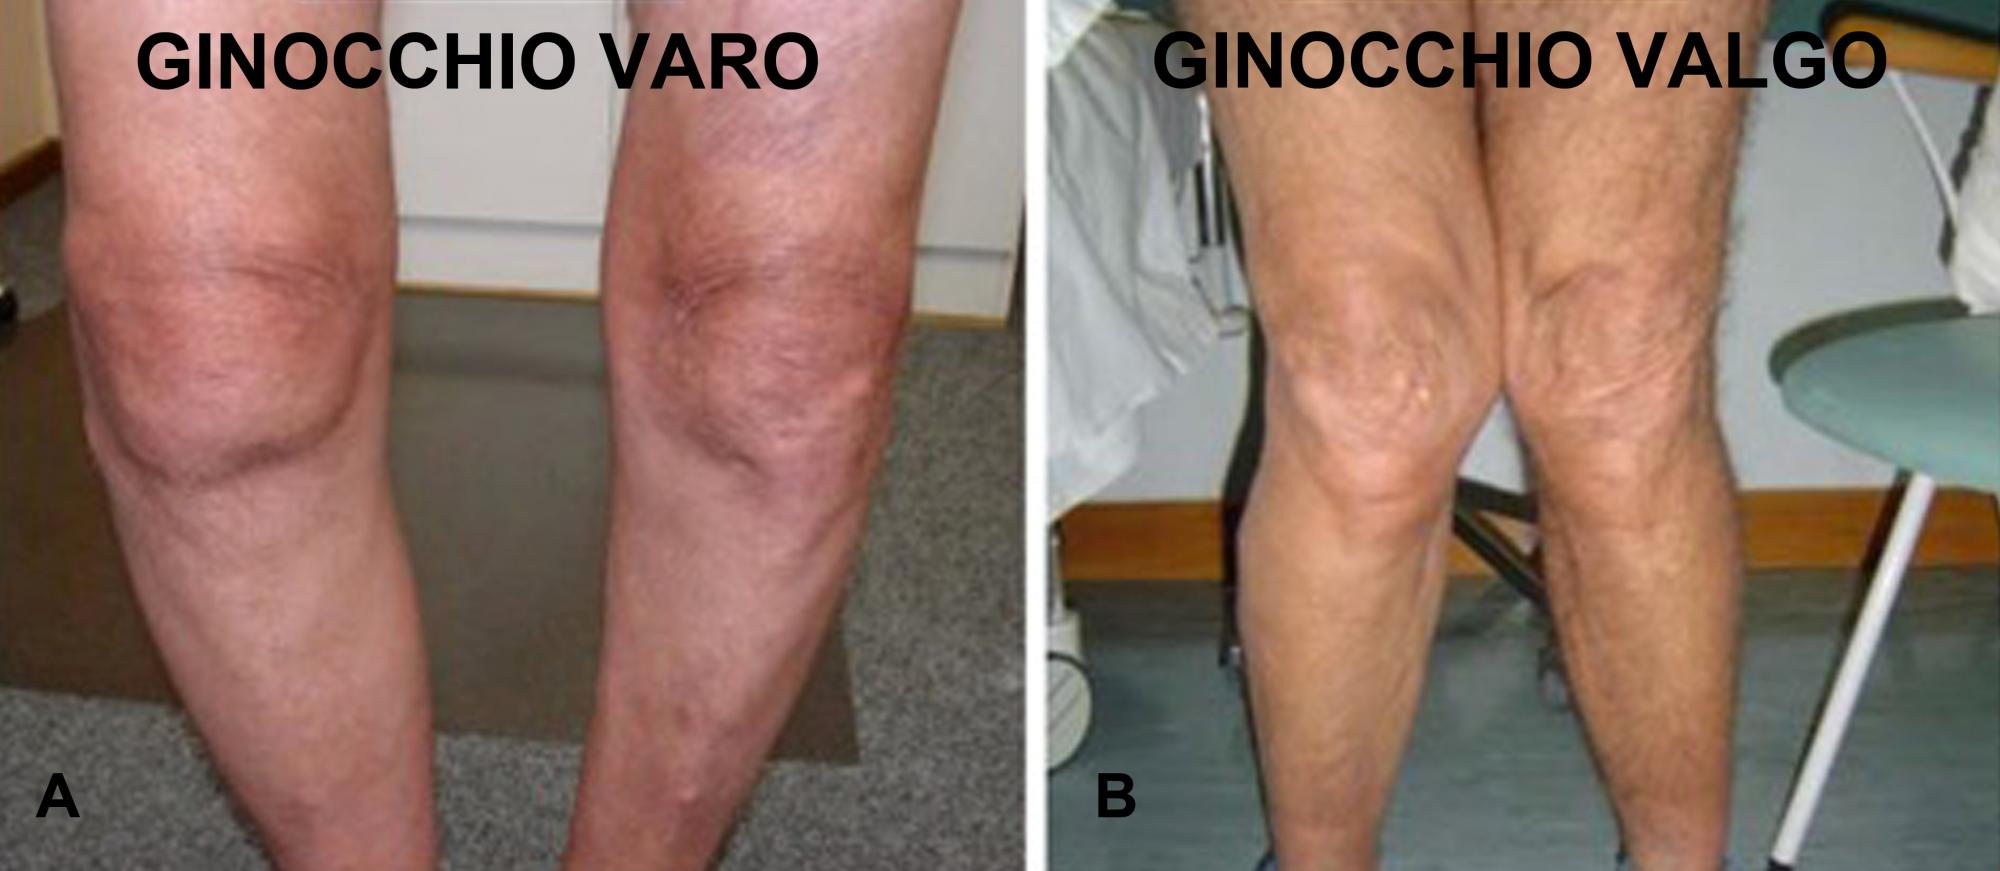 Fig. 3 - Deformità del ginocchio: A, ginocchio varo; B, ginocchio valgo